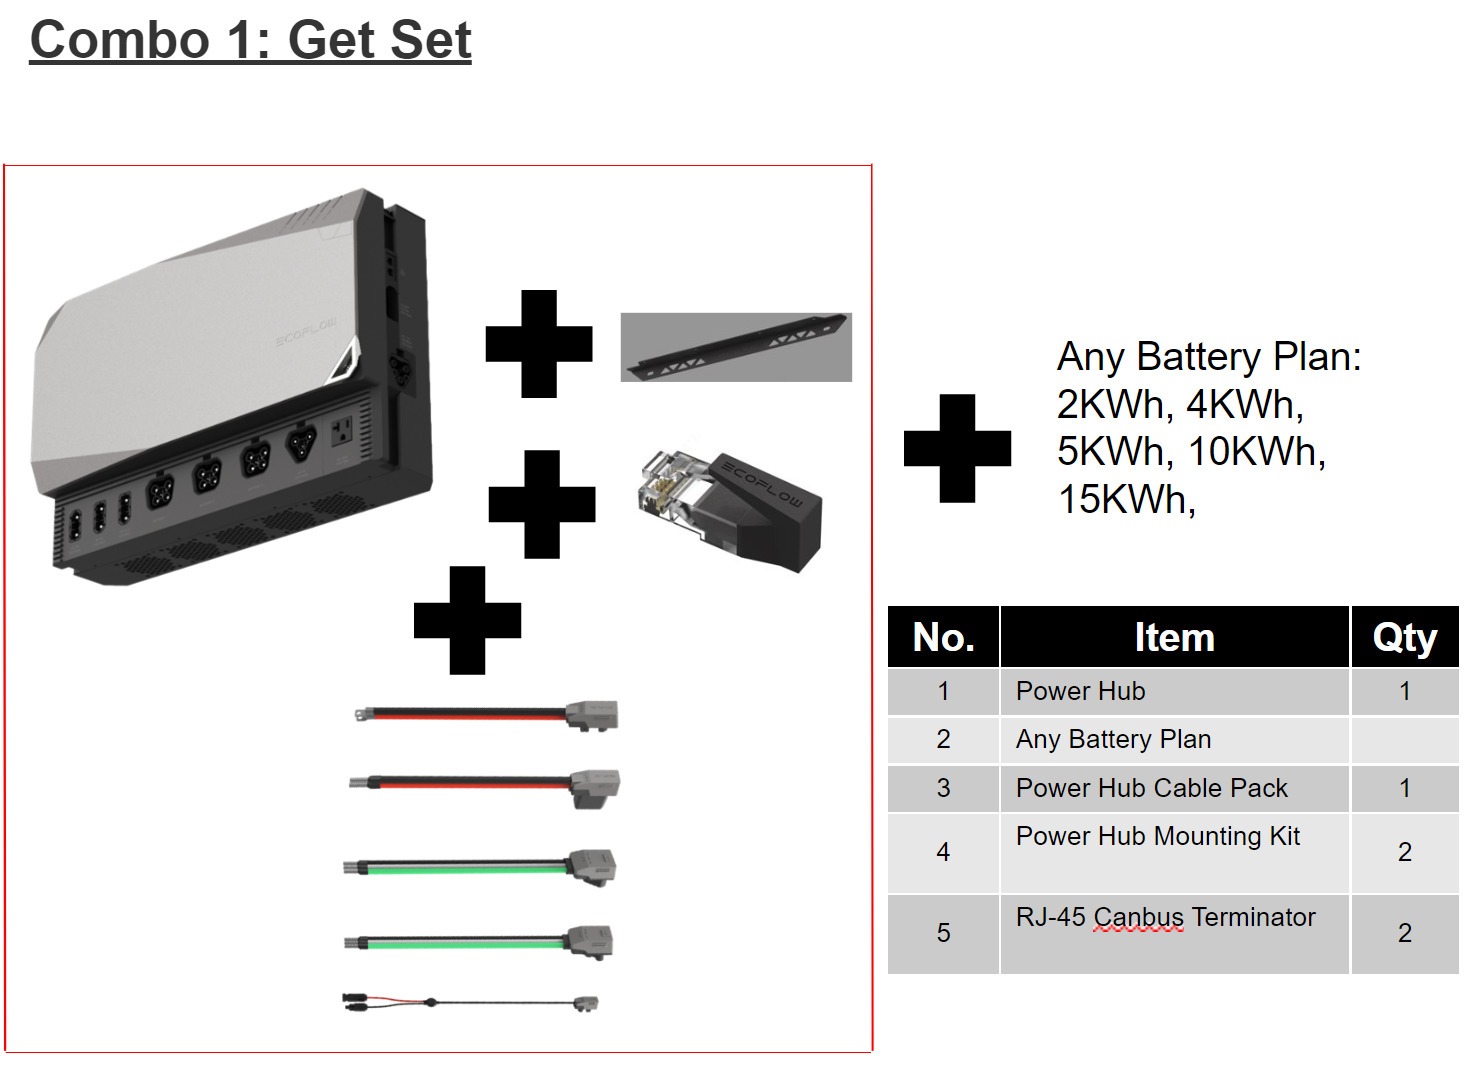 EcoFlow Power Kit